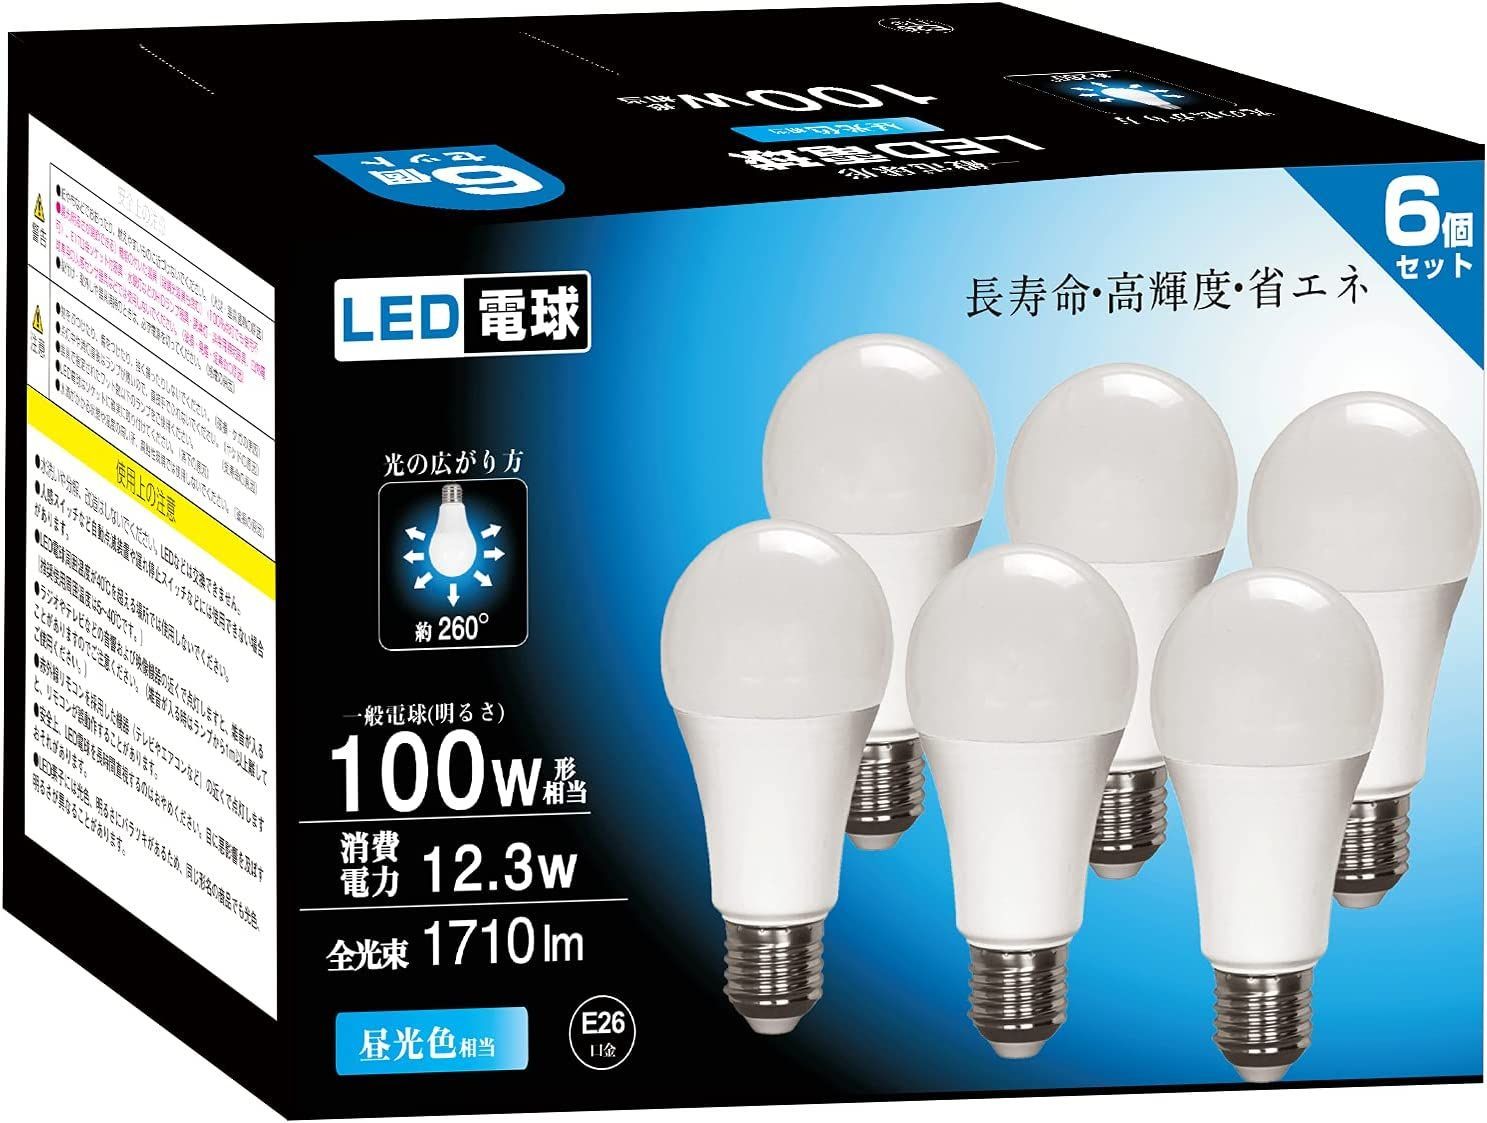 LED電球 E26口金 100W形相当 昼光色 14W 高輝度